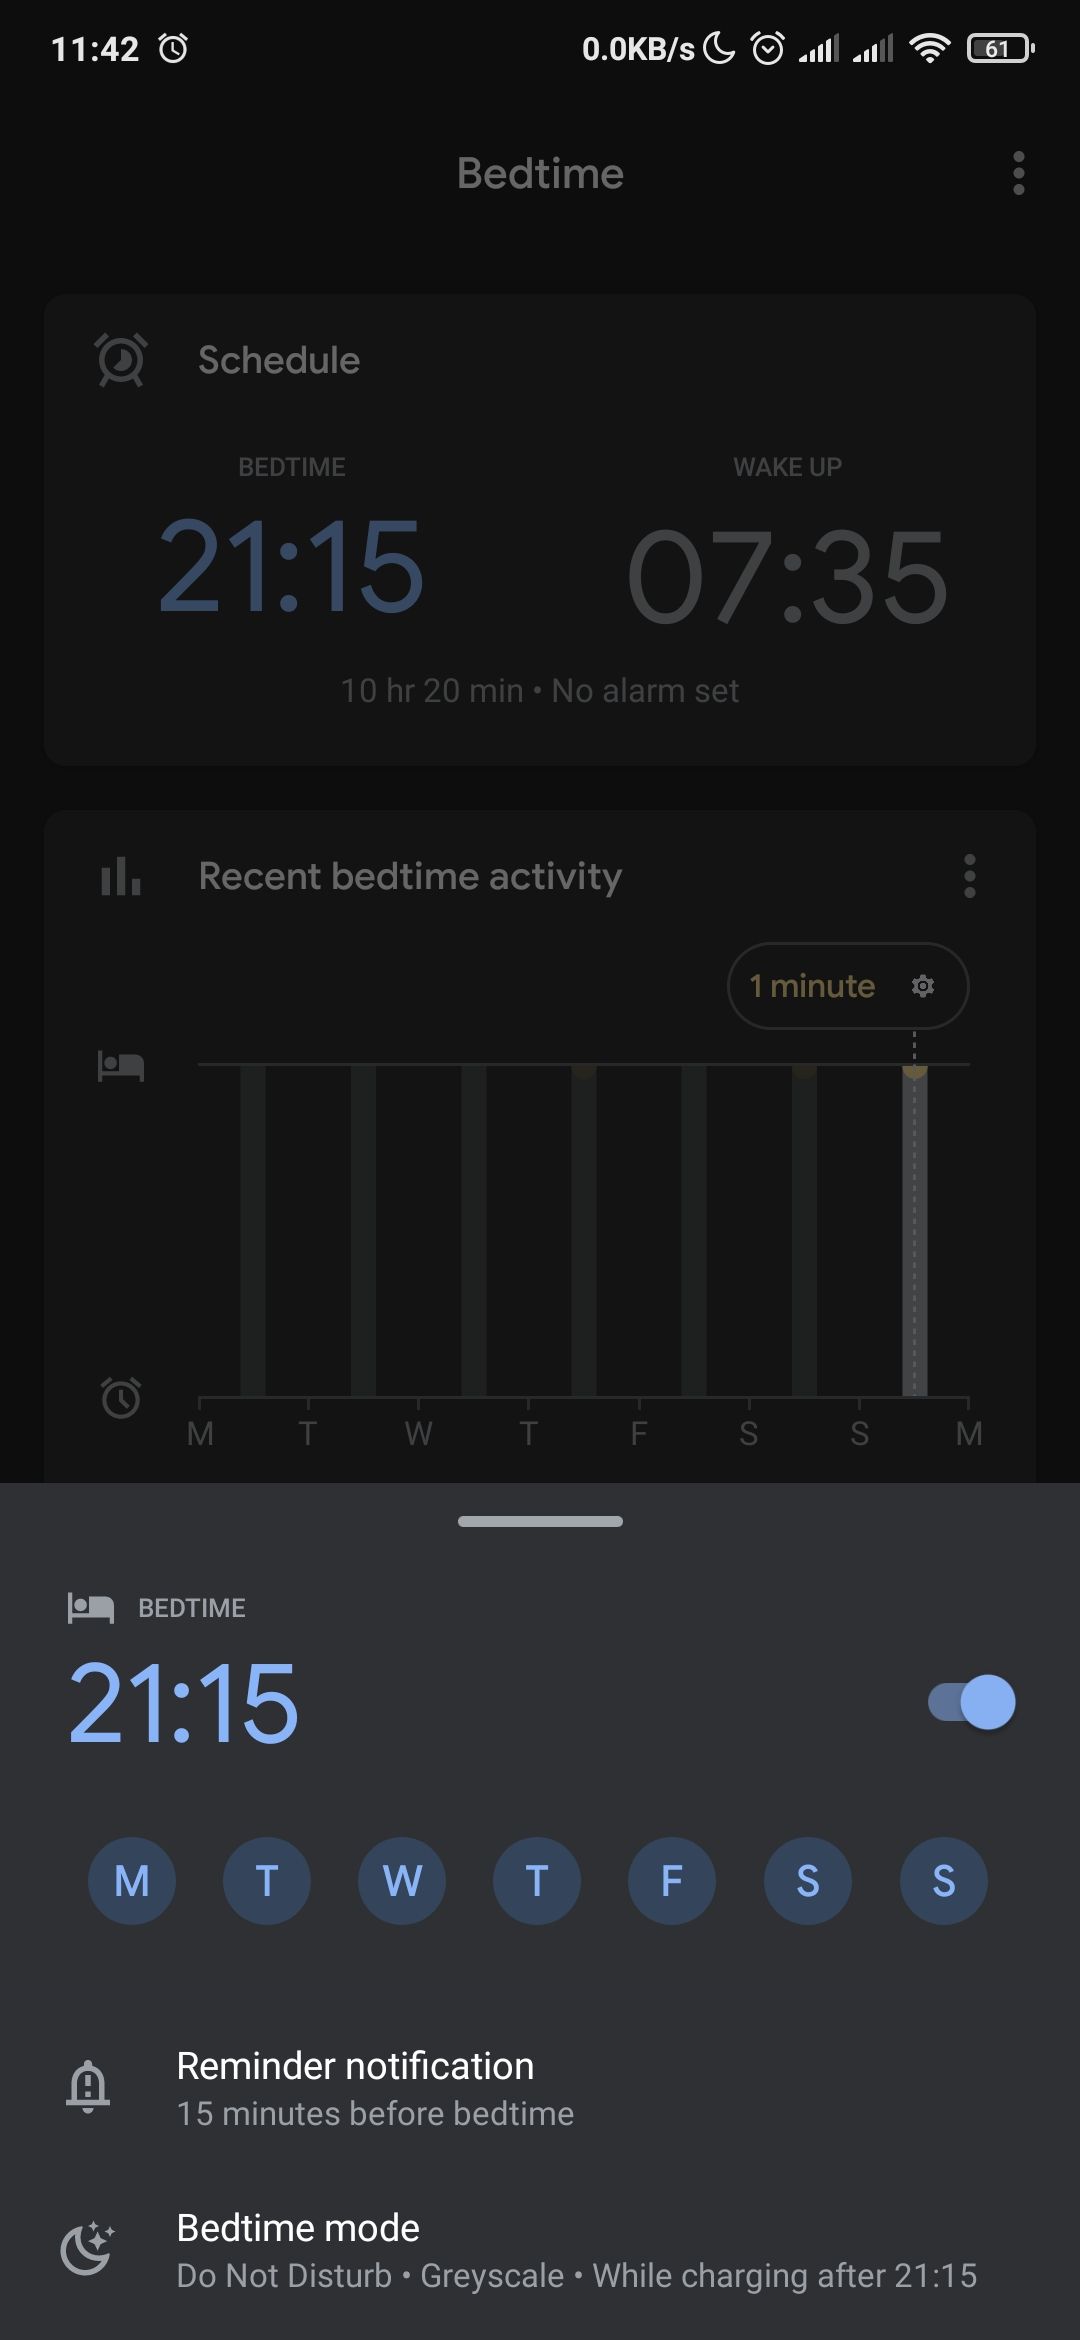 Customizing bedtime mode in Google's clock app